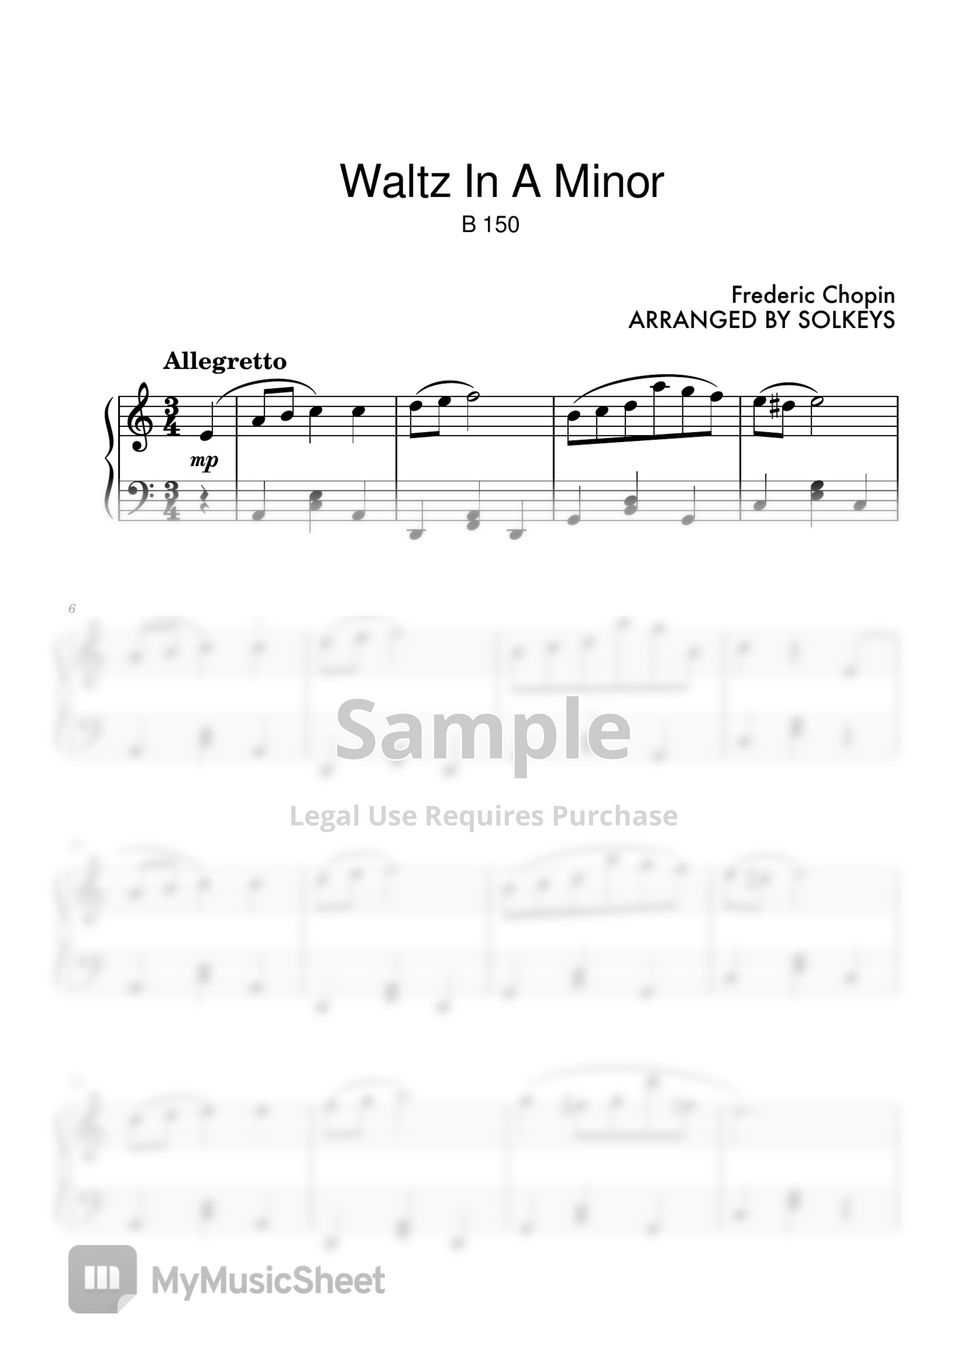 Frederic Chopin - Waltz in A minor, B. 150, Op. Posth. by SolKeys